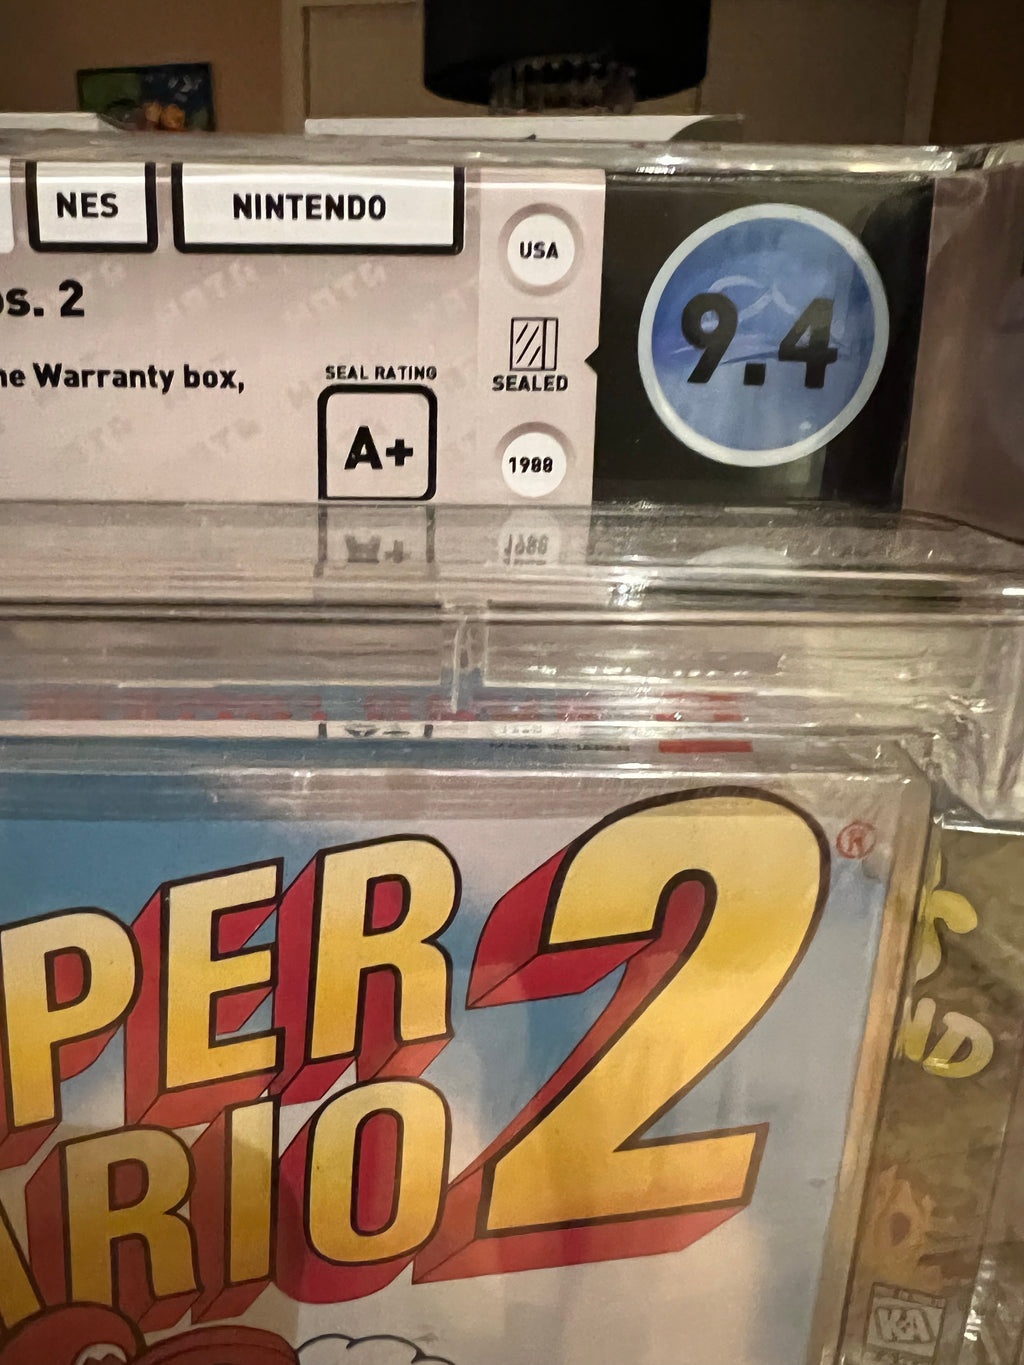 Super Mario Bros. 2 - Wata 9.4 A+ Sealed [Oval SOQ] Nintendo 1988